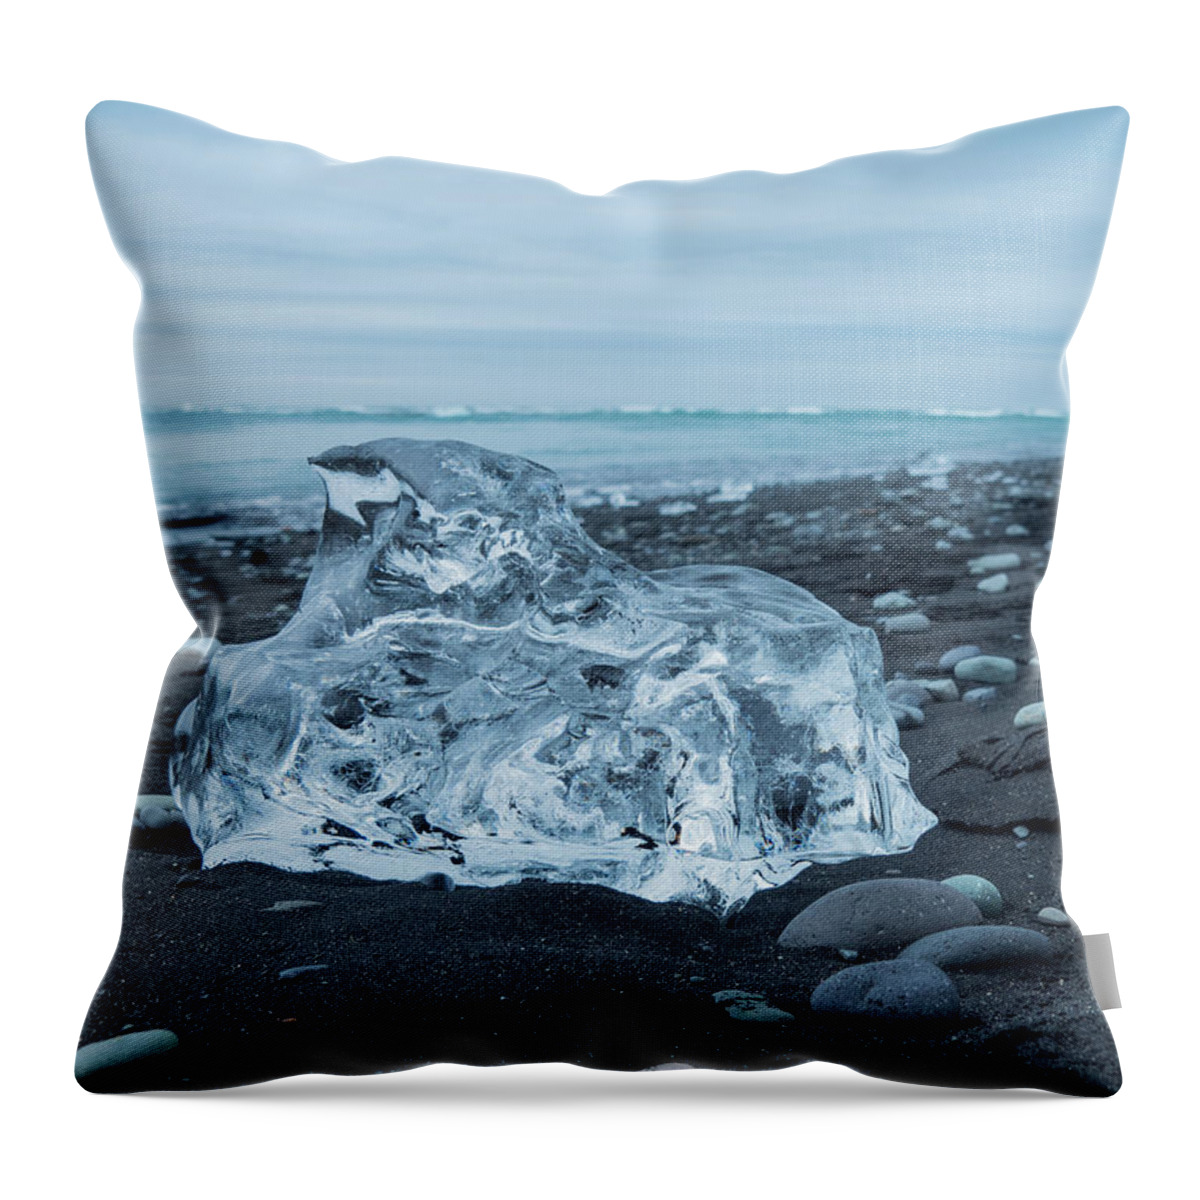 Diamond Beach Throw Pillow featuring the photograph Glacial Ice on Diamond Beach by Kristia Adams